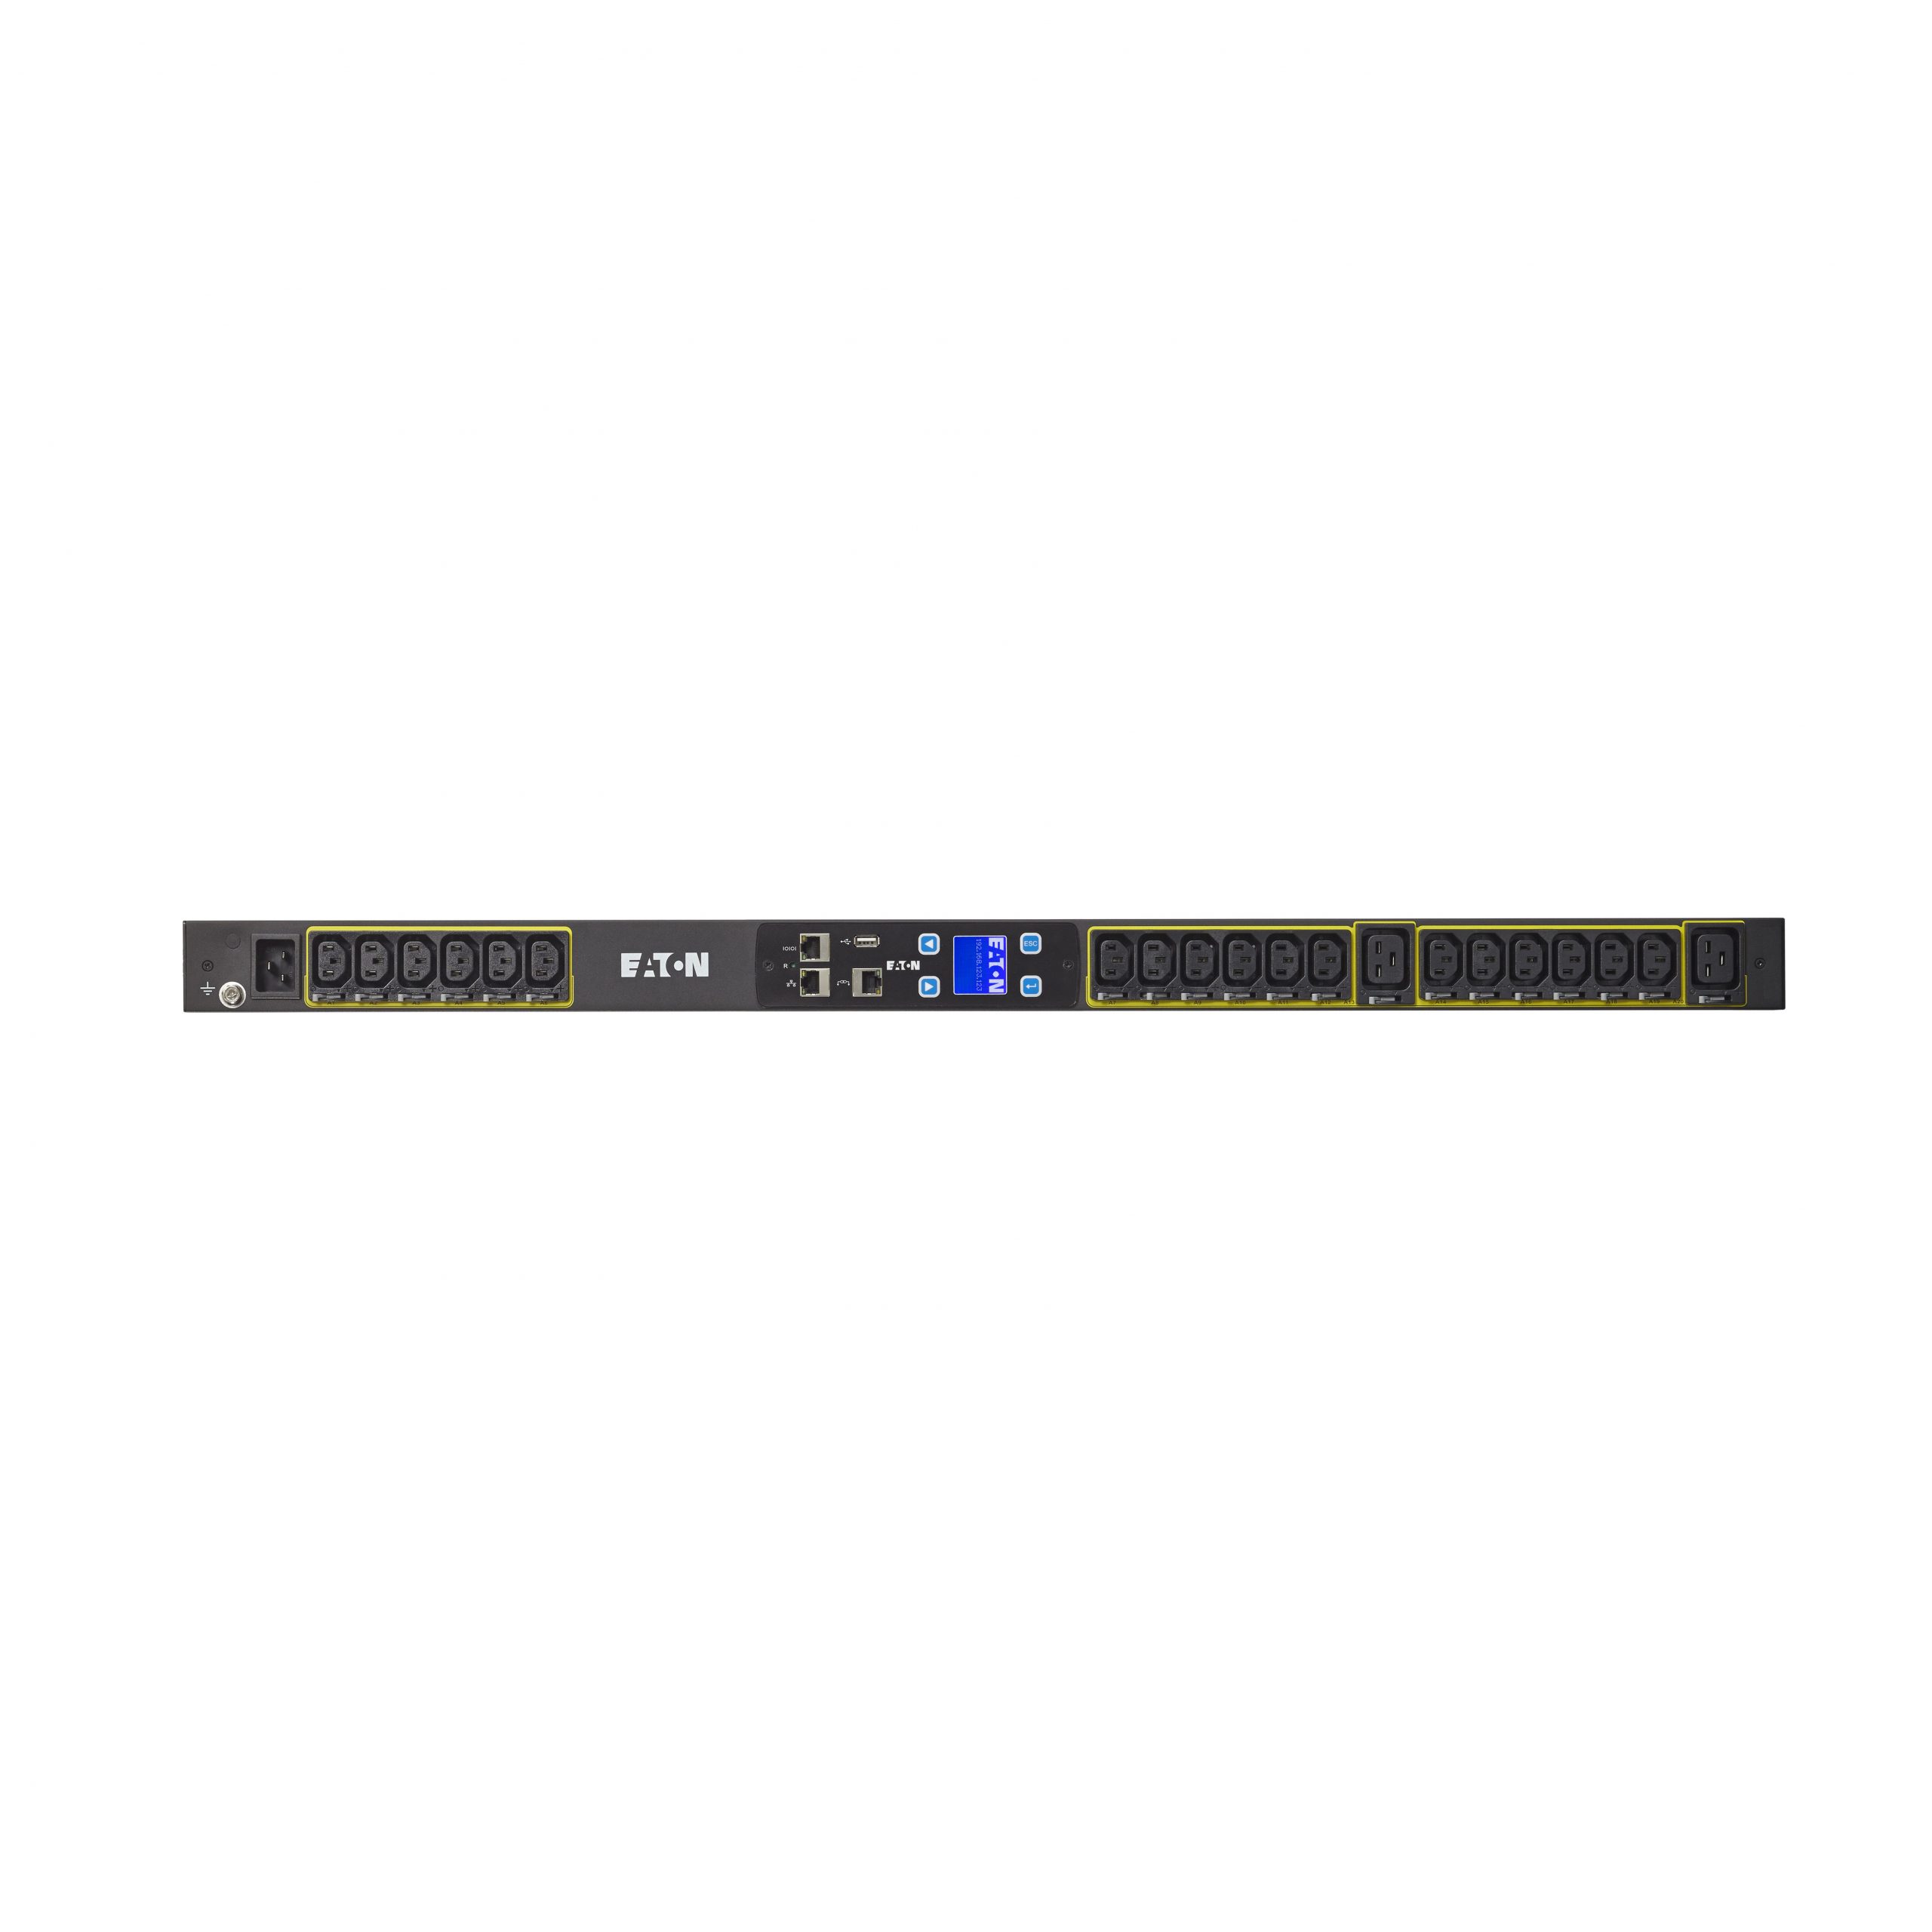 Eaton Metered Input Rack PDU 3.84 kW max 100-240V 16A 0U Single-Phase PDUIEC 60320 C2018 x IEC 60320 C13, 2 x IEC 60320 C19120 V AC,… EMI103-10